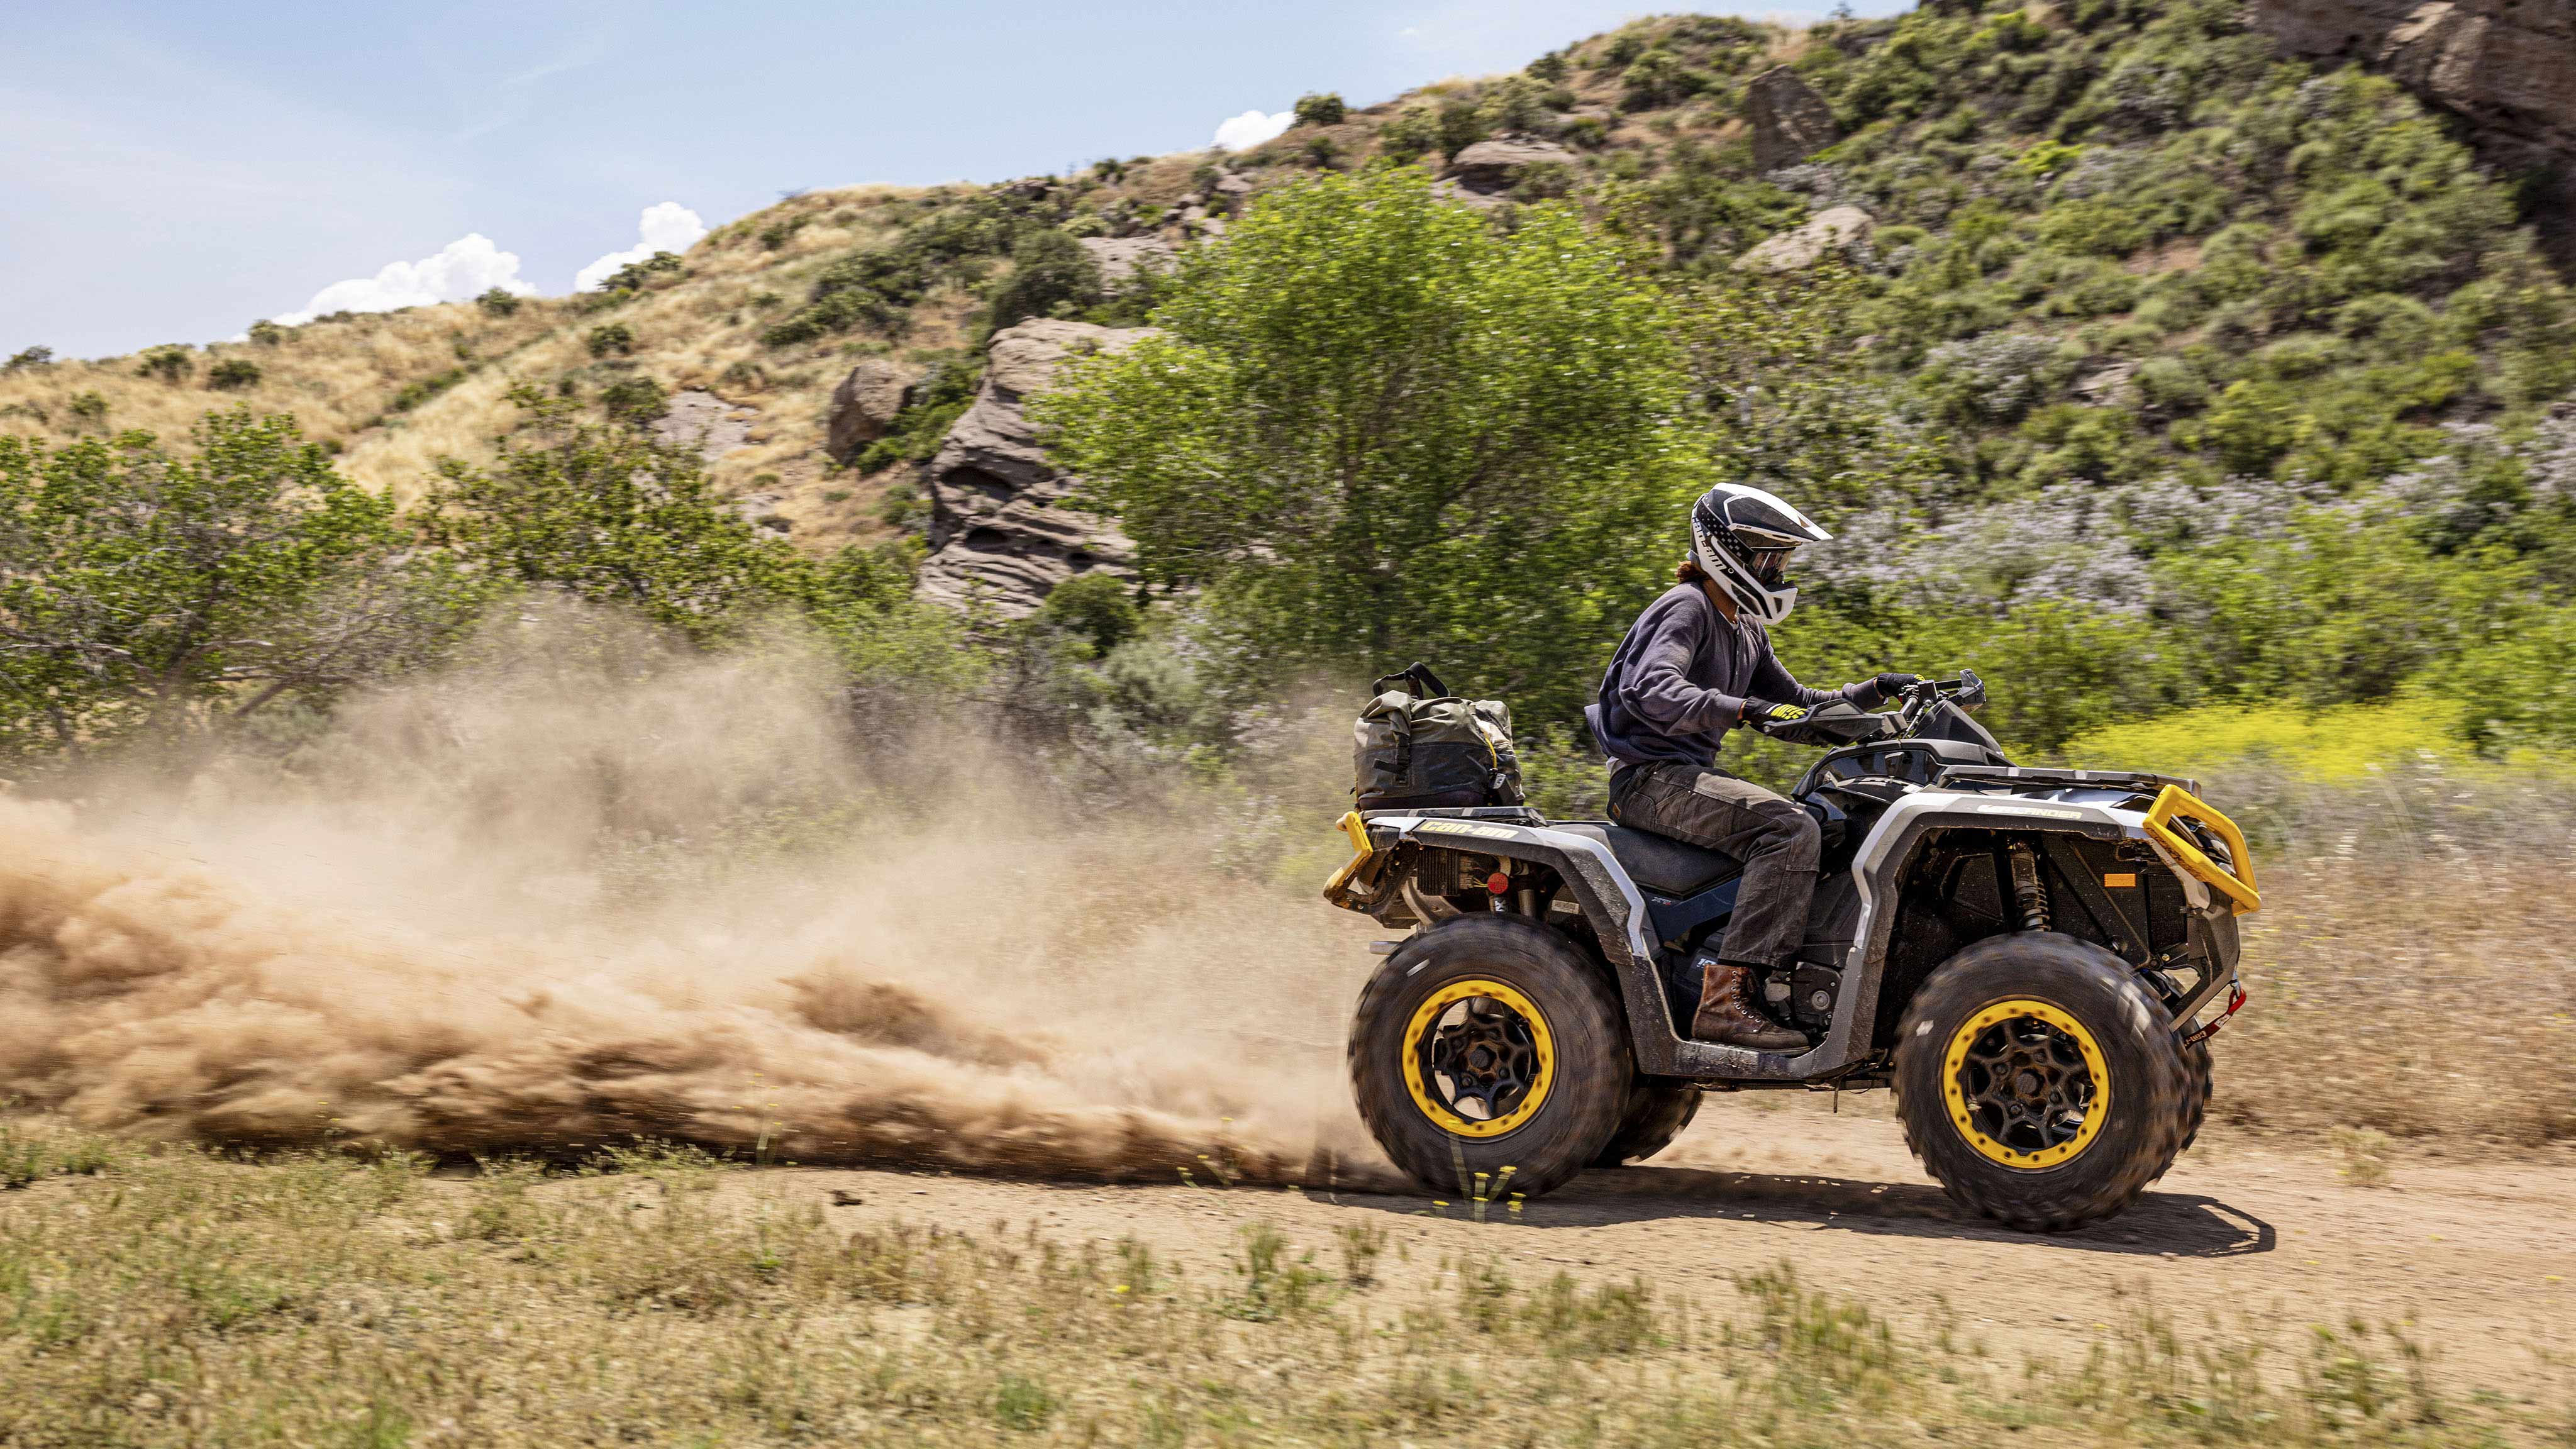 A rider driving a Can-Am Outlander ATV on a dirt trail